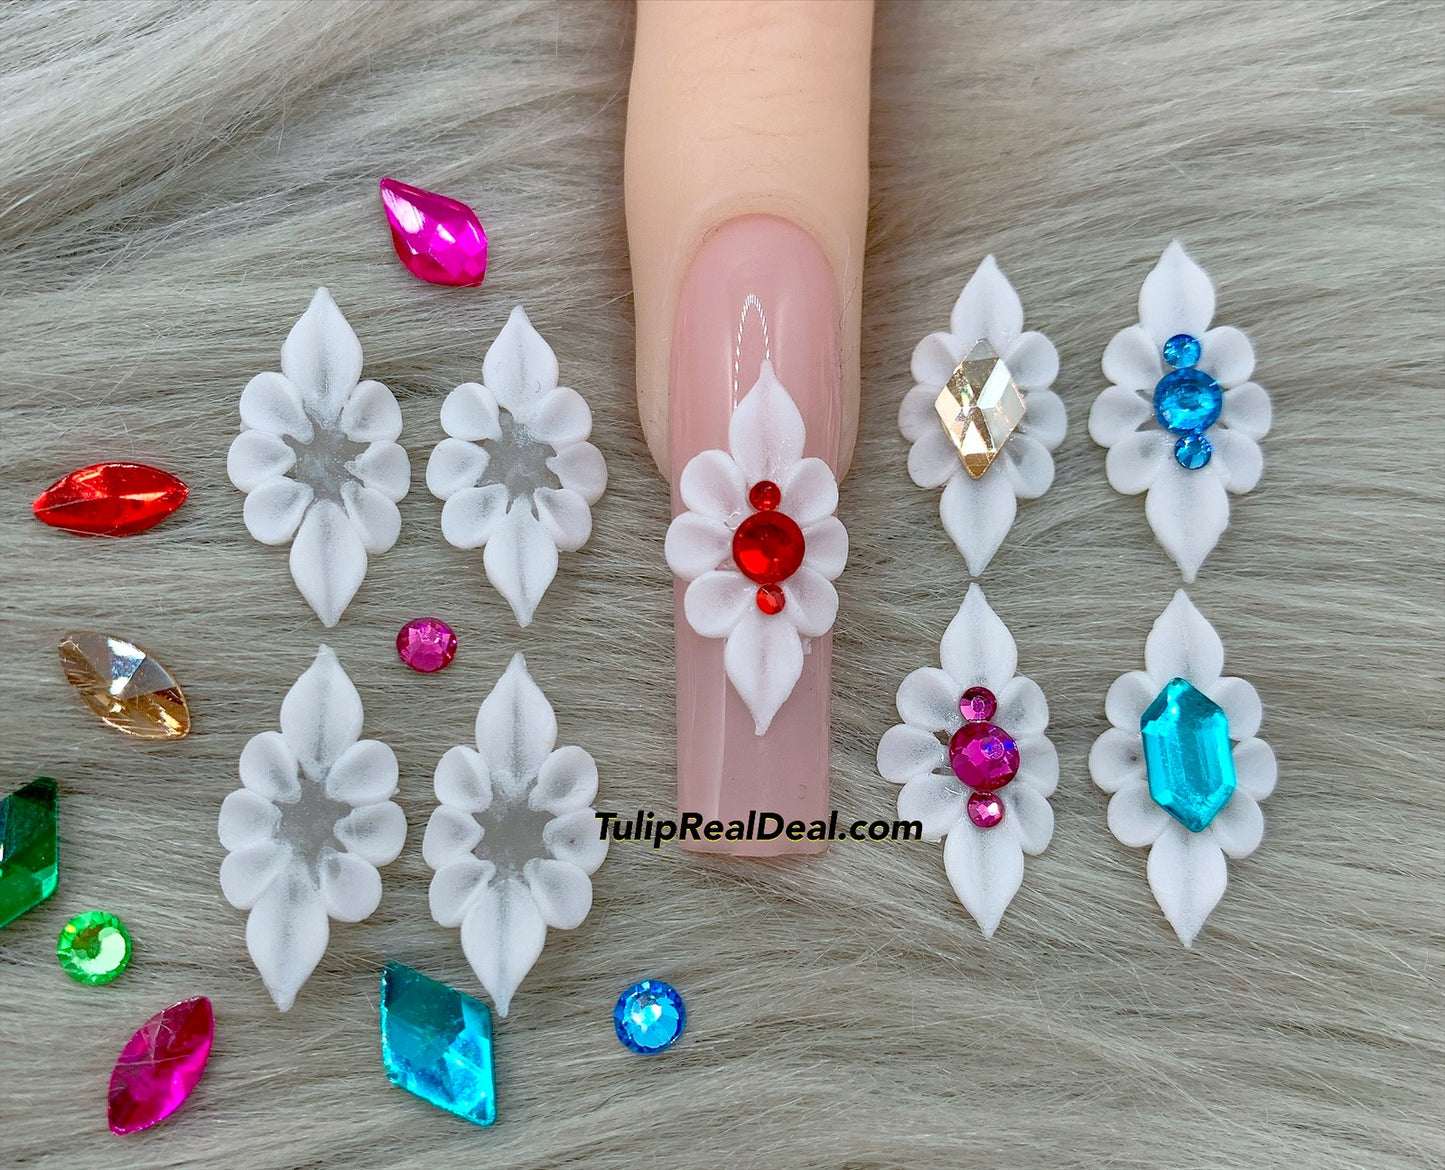 PLAIN HANDMADE 3D WHITE Acrylic Flowers nail charms